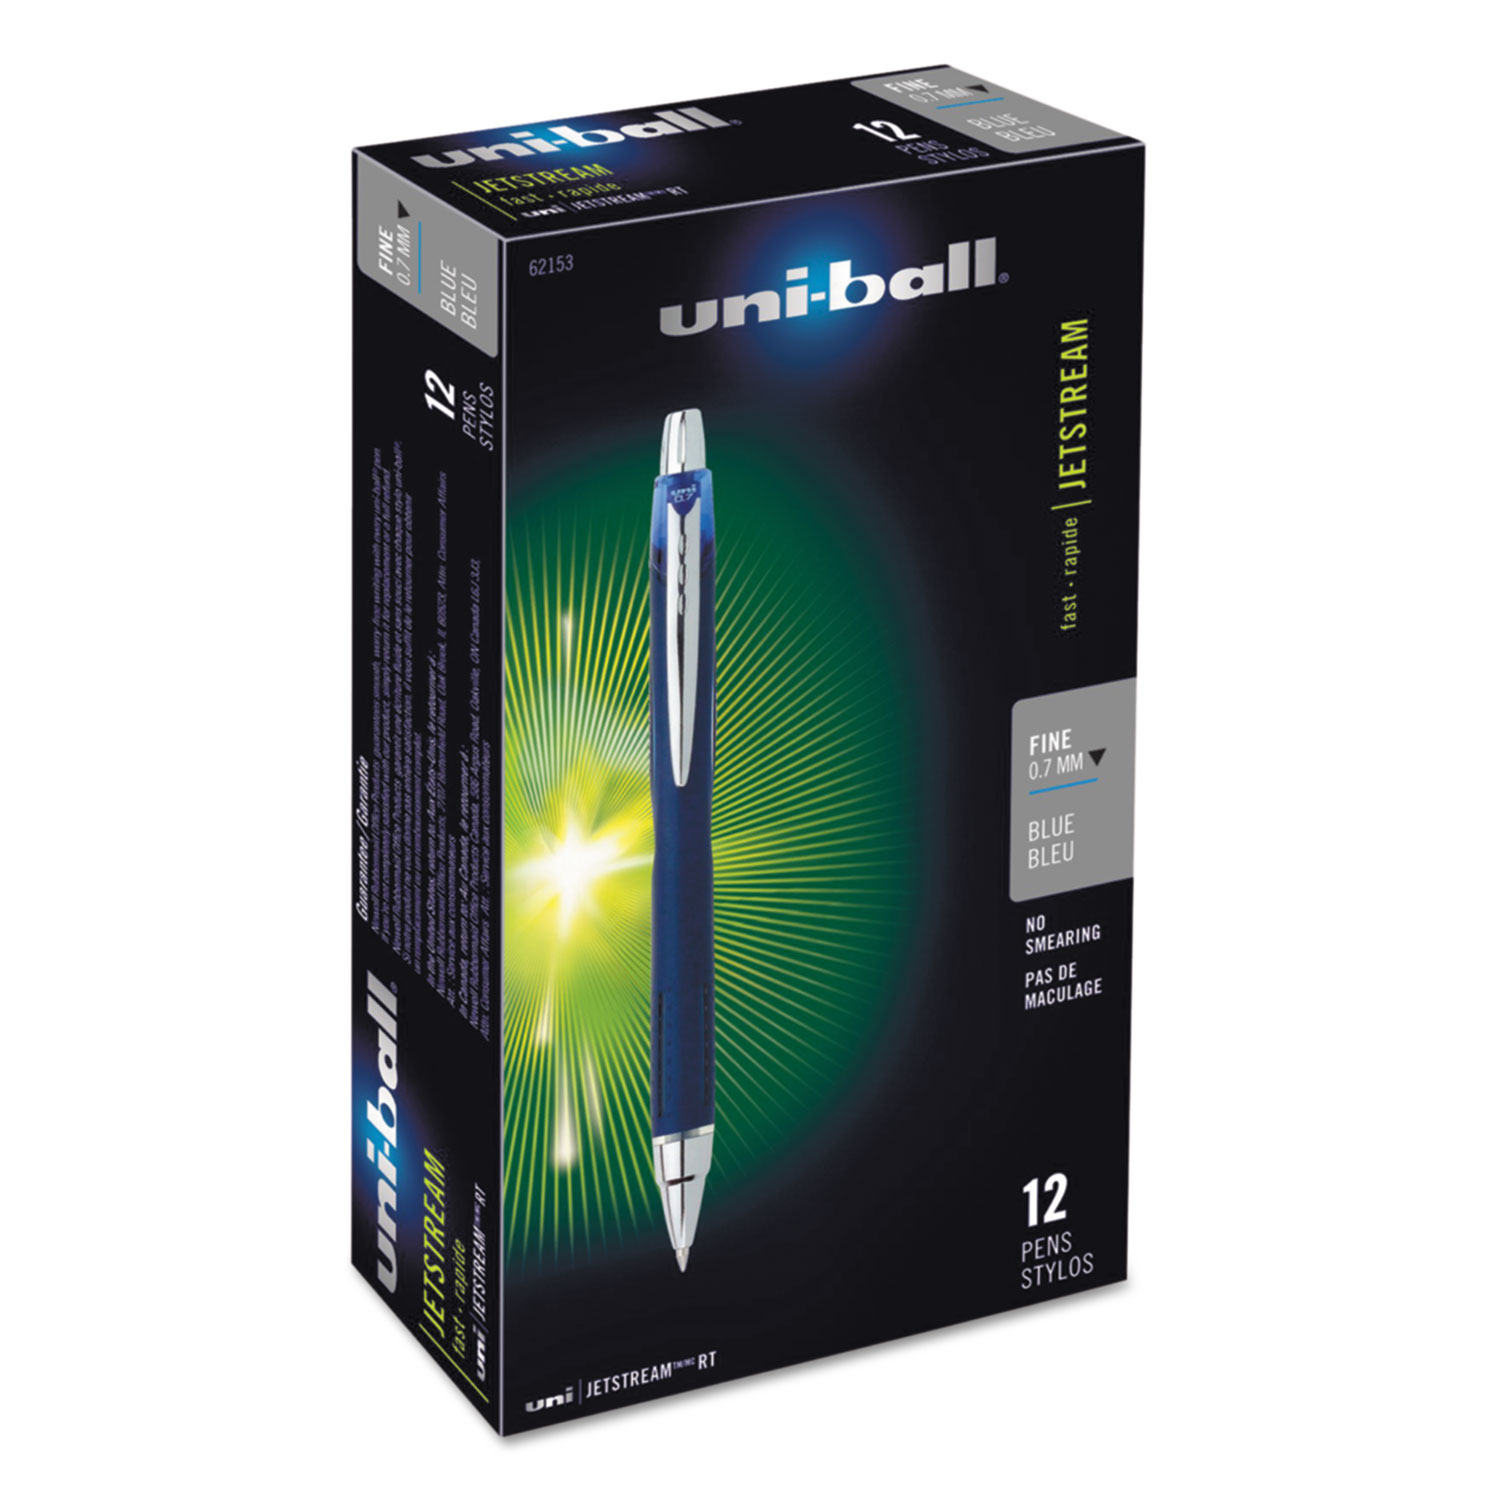  uni-ball 62153 Jetstream RT Retractable Roller Ball Pen, Fine 0.7mm, Blue Ink, Blue Barrel (UBC62153) 